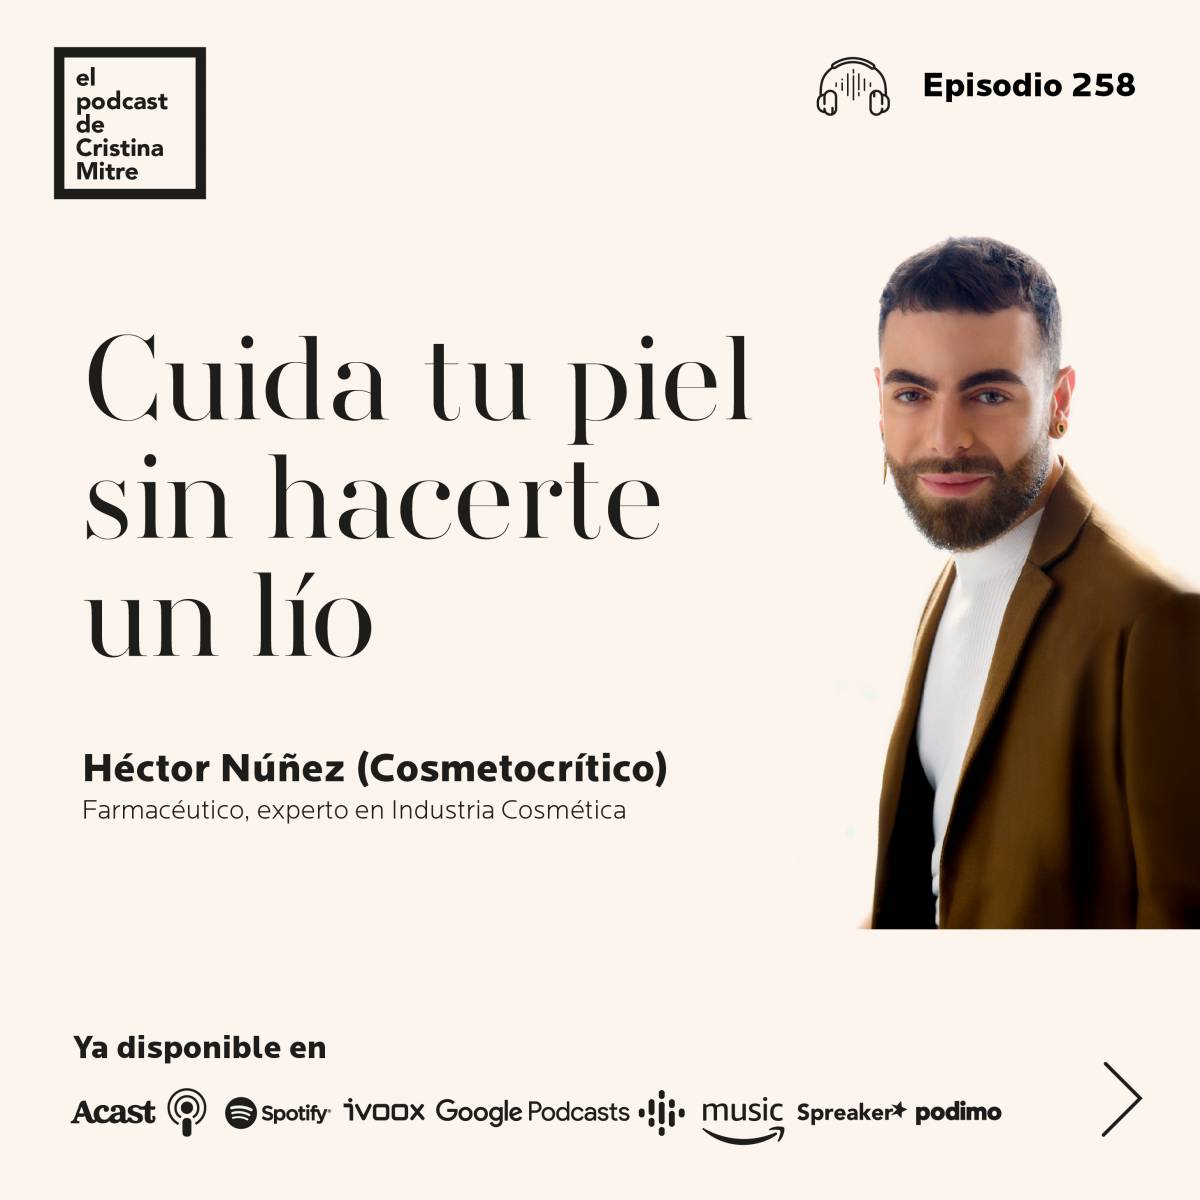 el podcast de cristina mitre hector Núñez cuidado de la piel